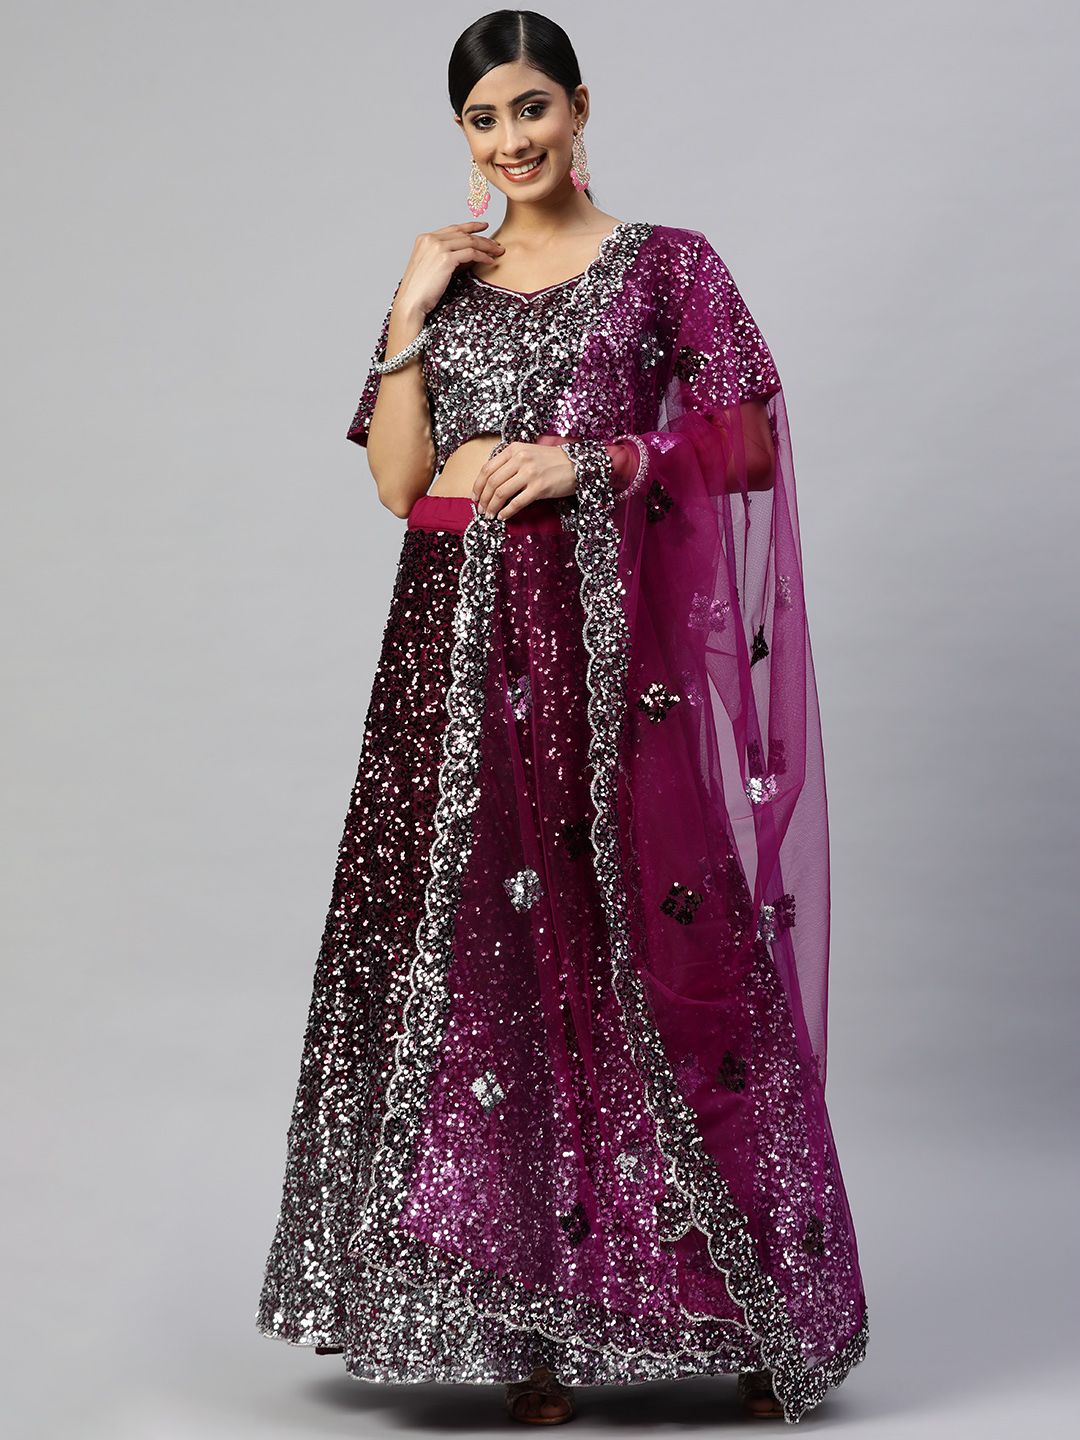 Readiprint Fashions Magenta & Silver-Toned Embellished Sequinned Semi-Stitched Lehenga Set Price in India